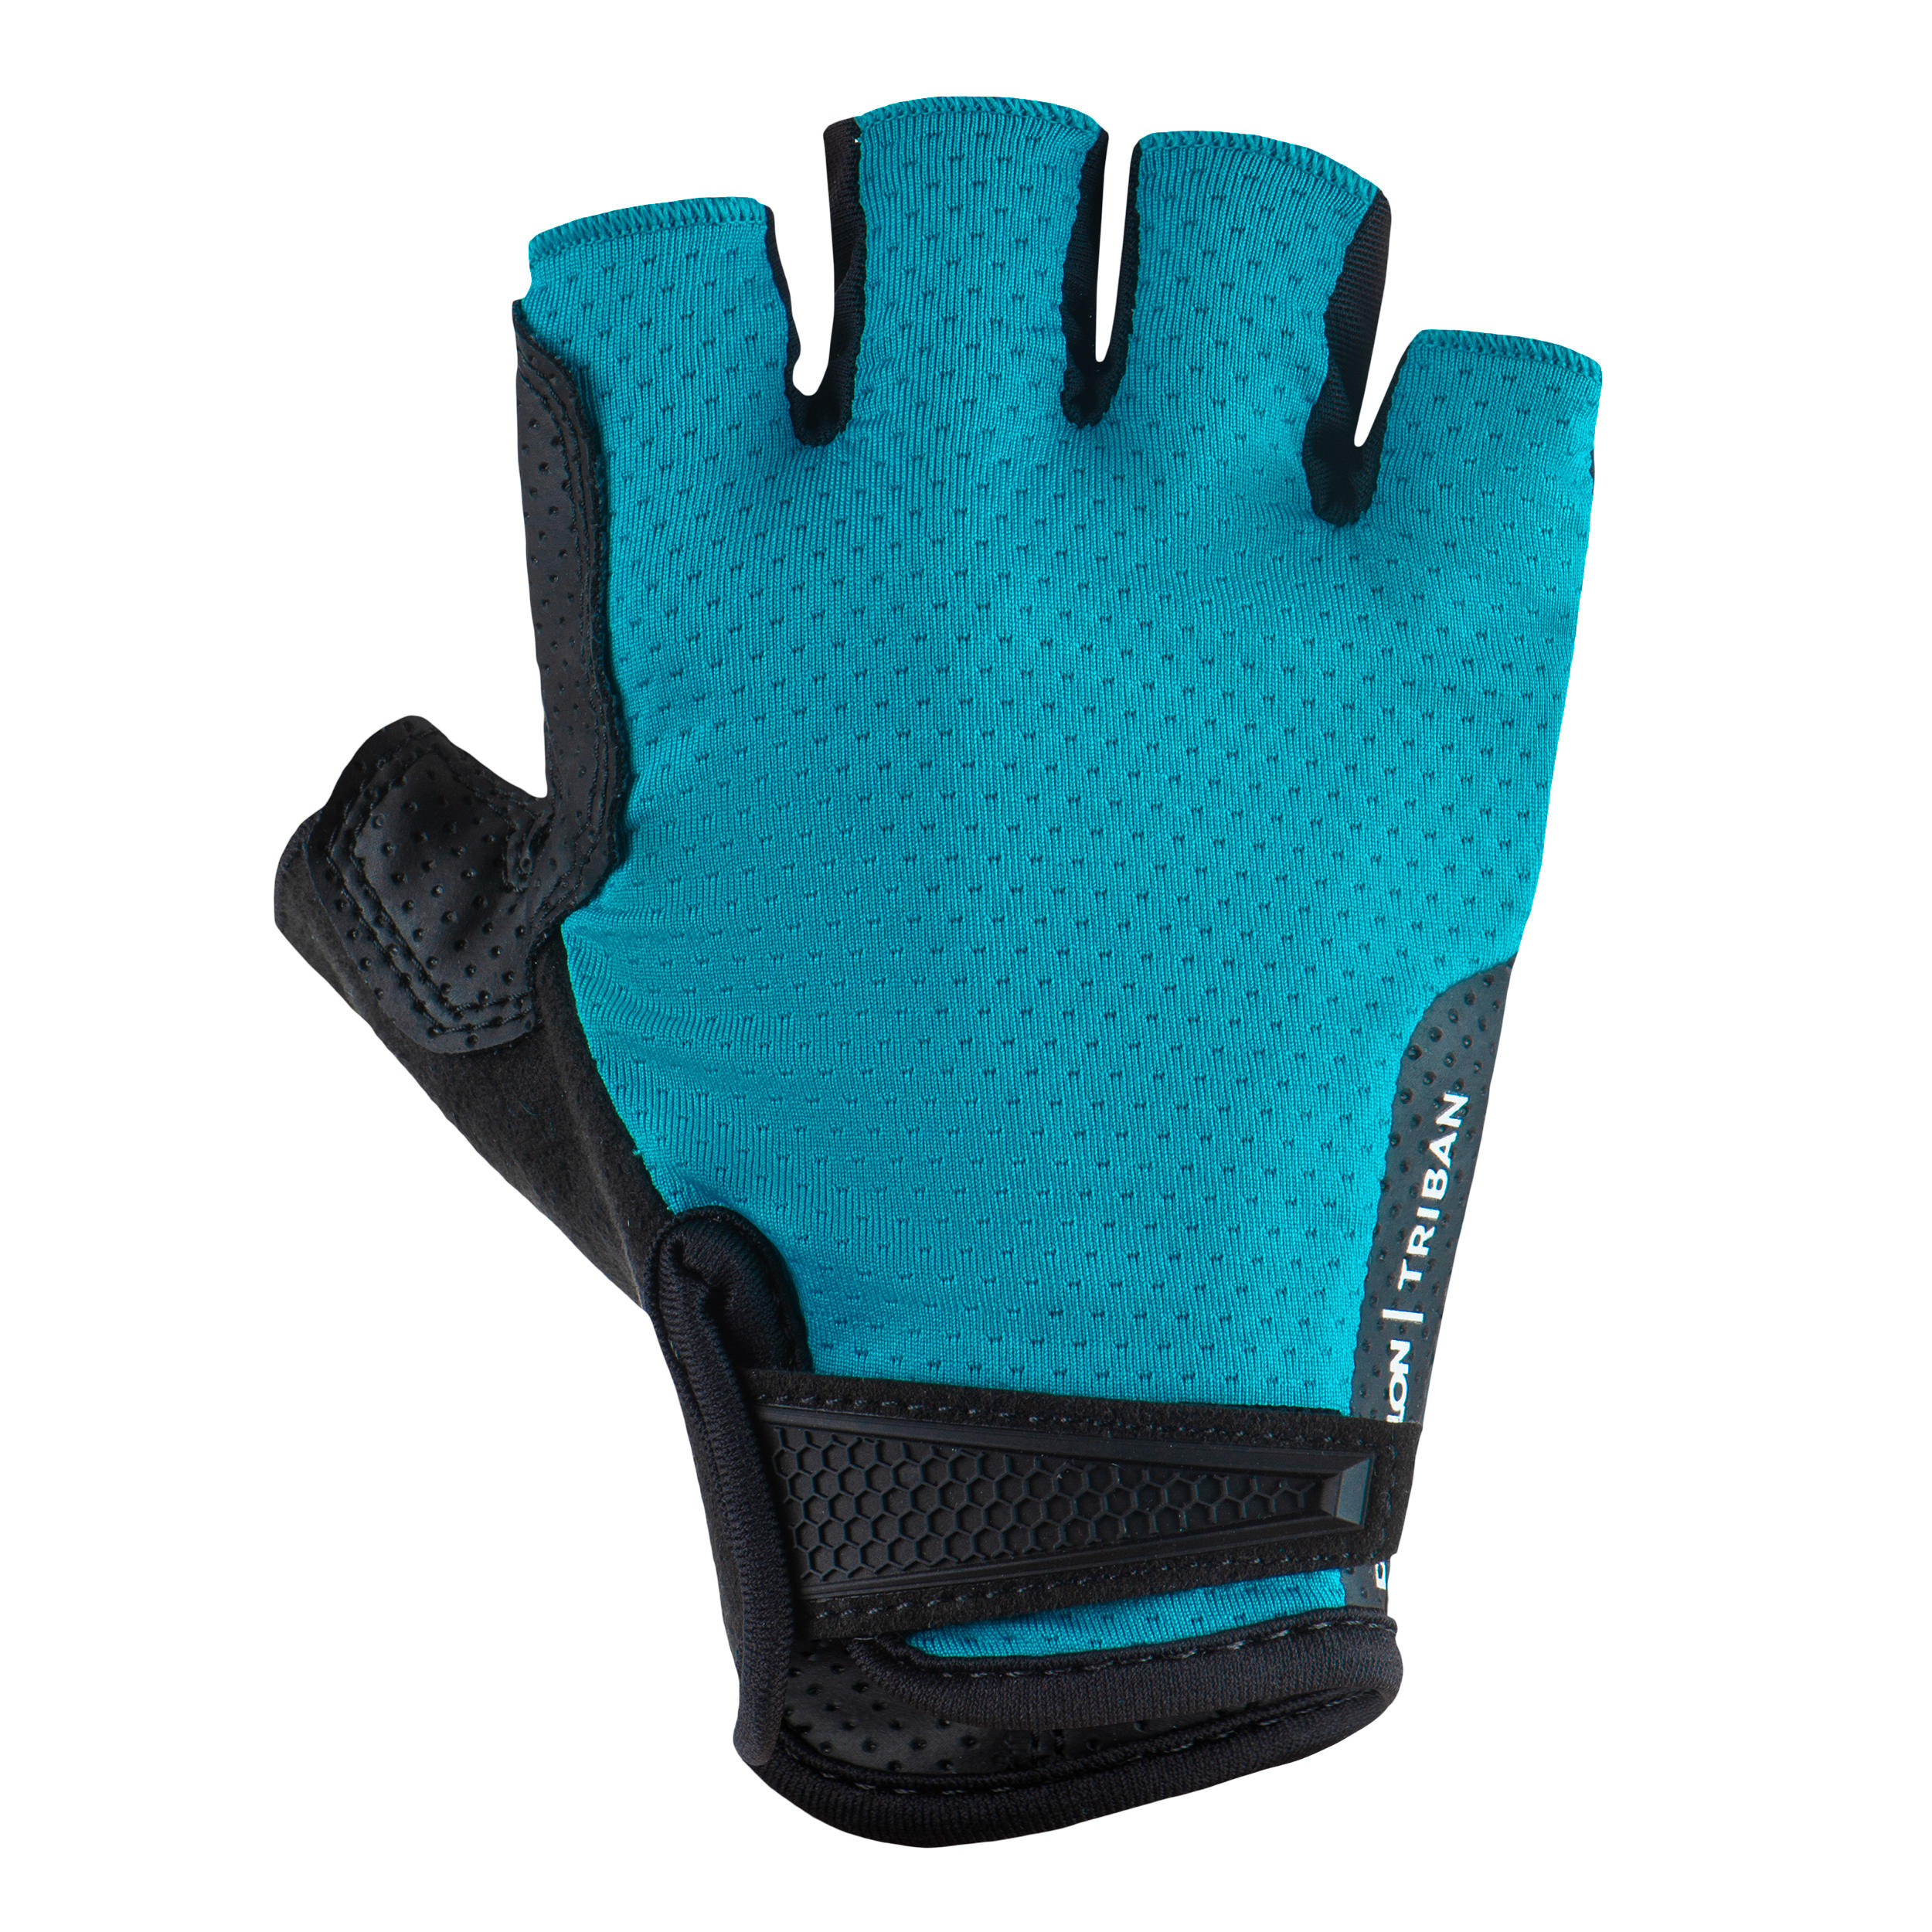 VAN RYSEL RoadC 900 Road Cycling Gloves - Blue